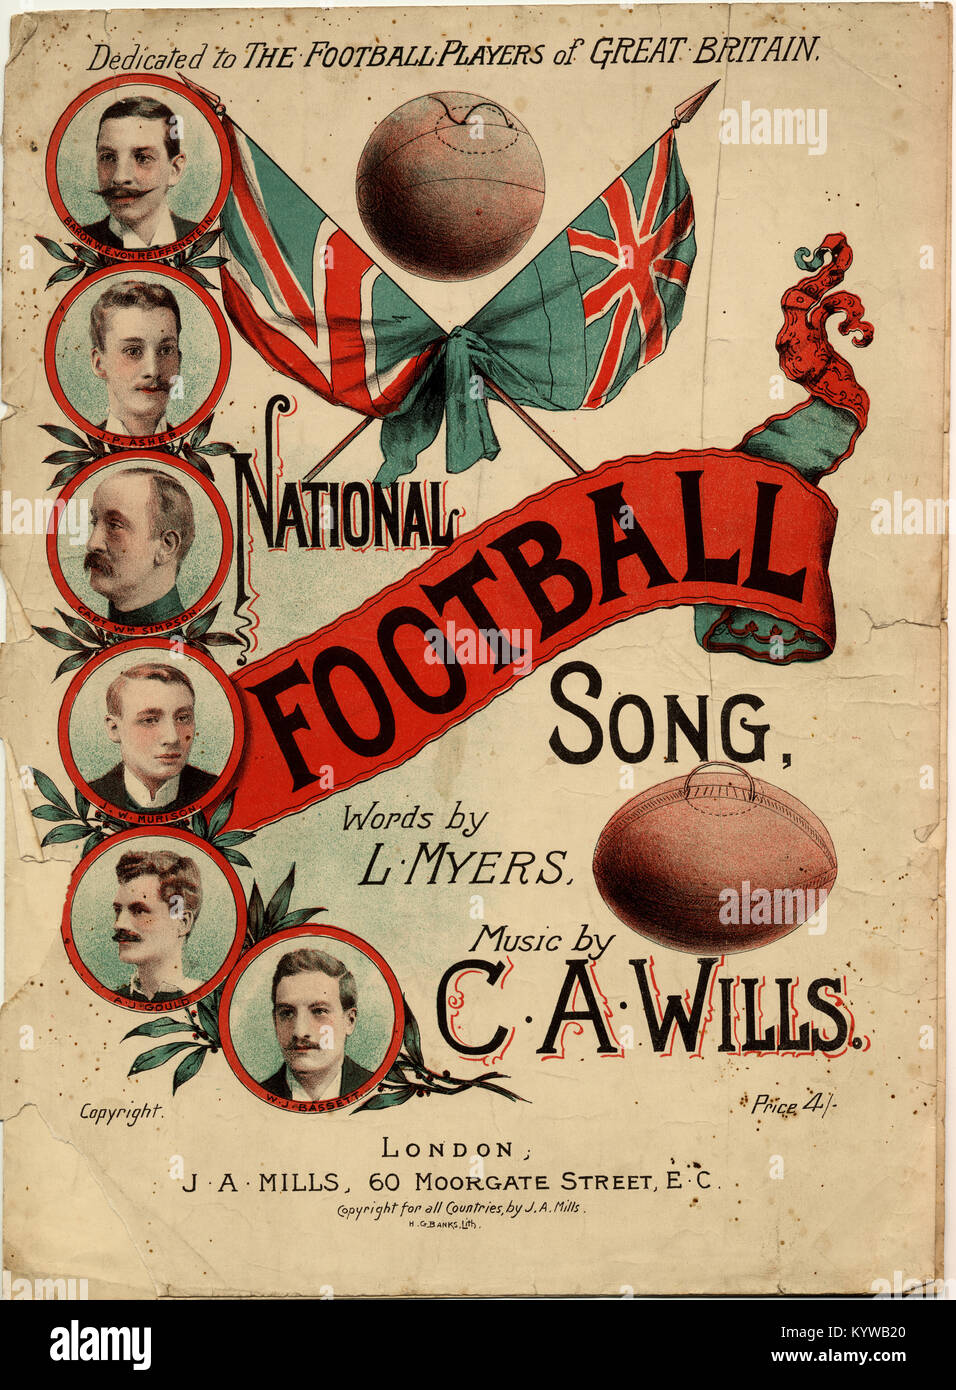 National Football Song-Dedicated aux pairs de Football de Grande-Bretagne Banque D'Images